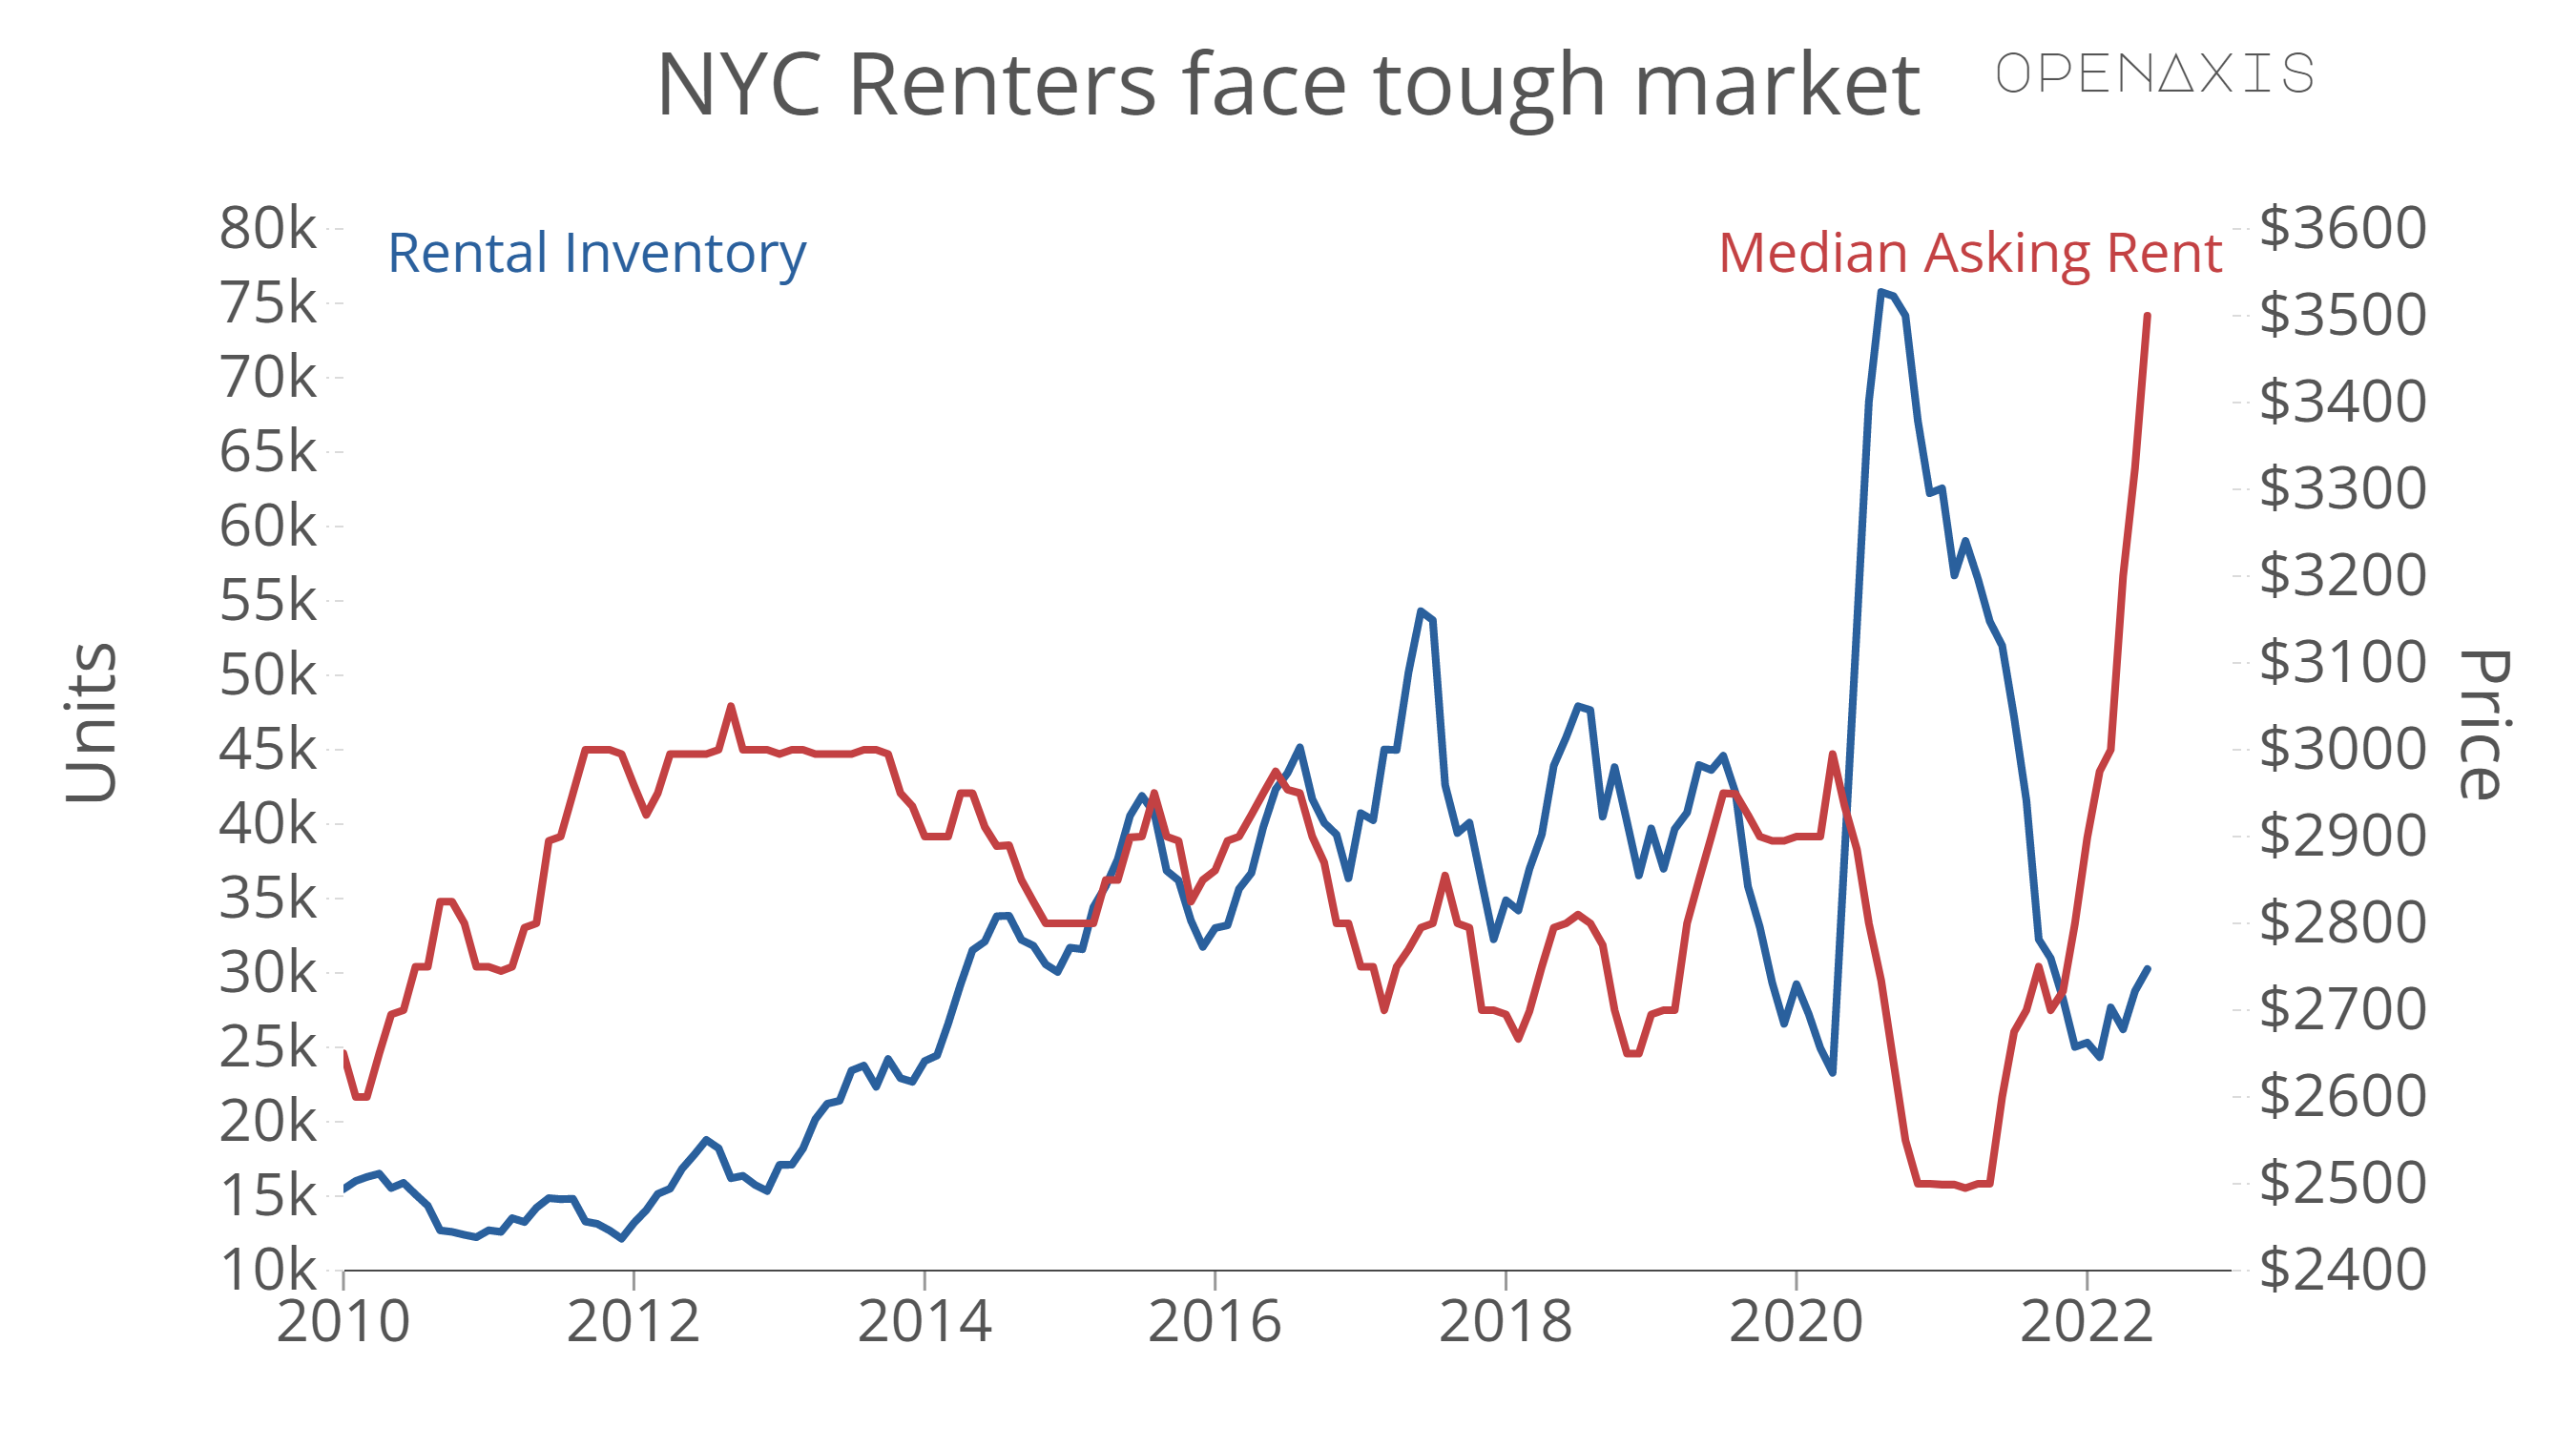 "NYC Renters face tough market"